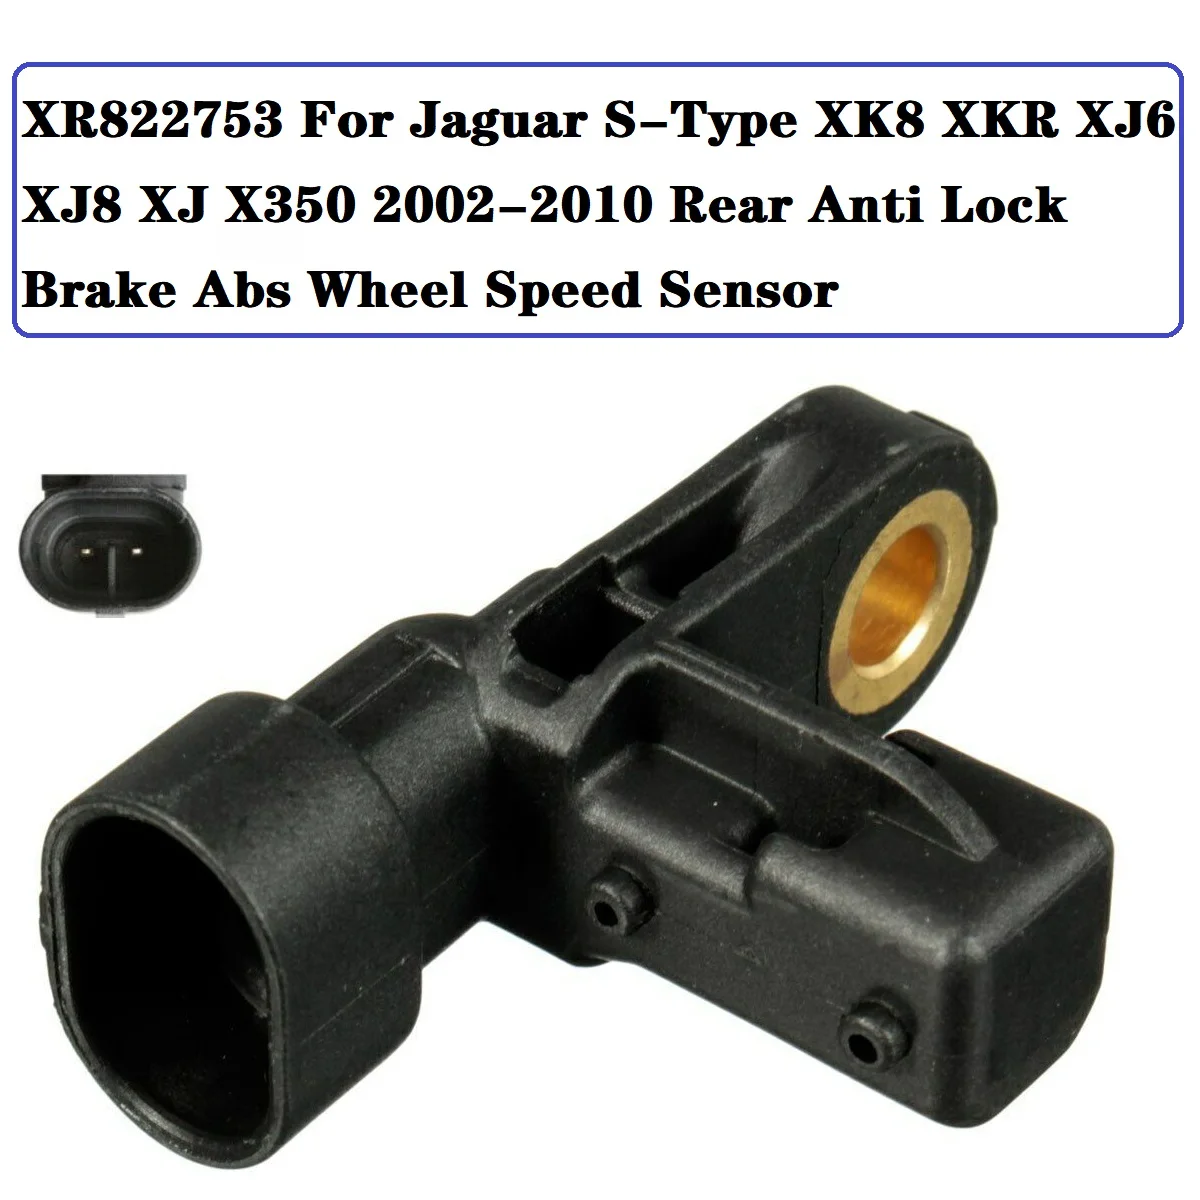 

XR822753 Rear Anti Lock Brake Abs Wheel Speed Sensor For Jaguar S-Type XK8 XKR XJ6 XJ8 XJ X350 2002-2010